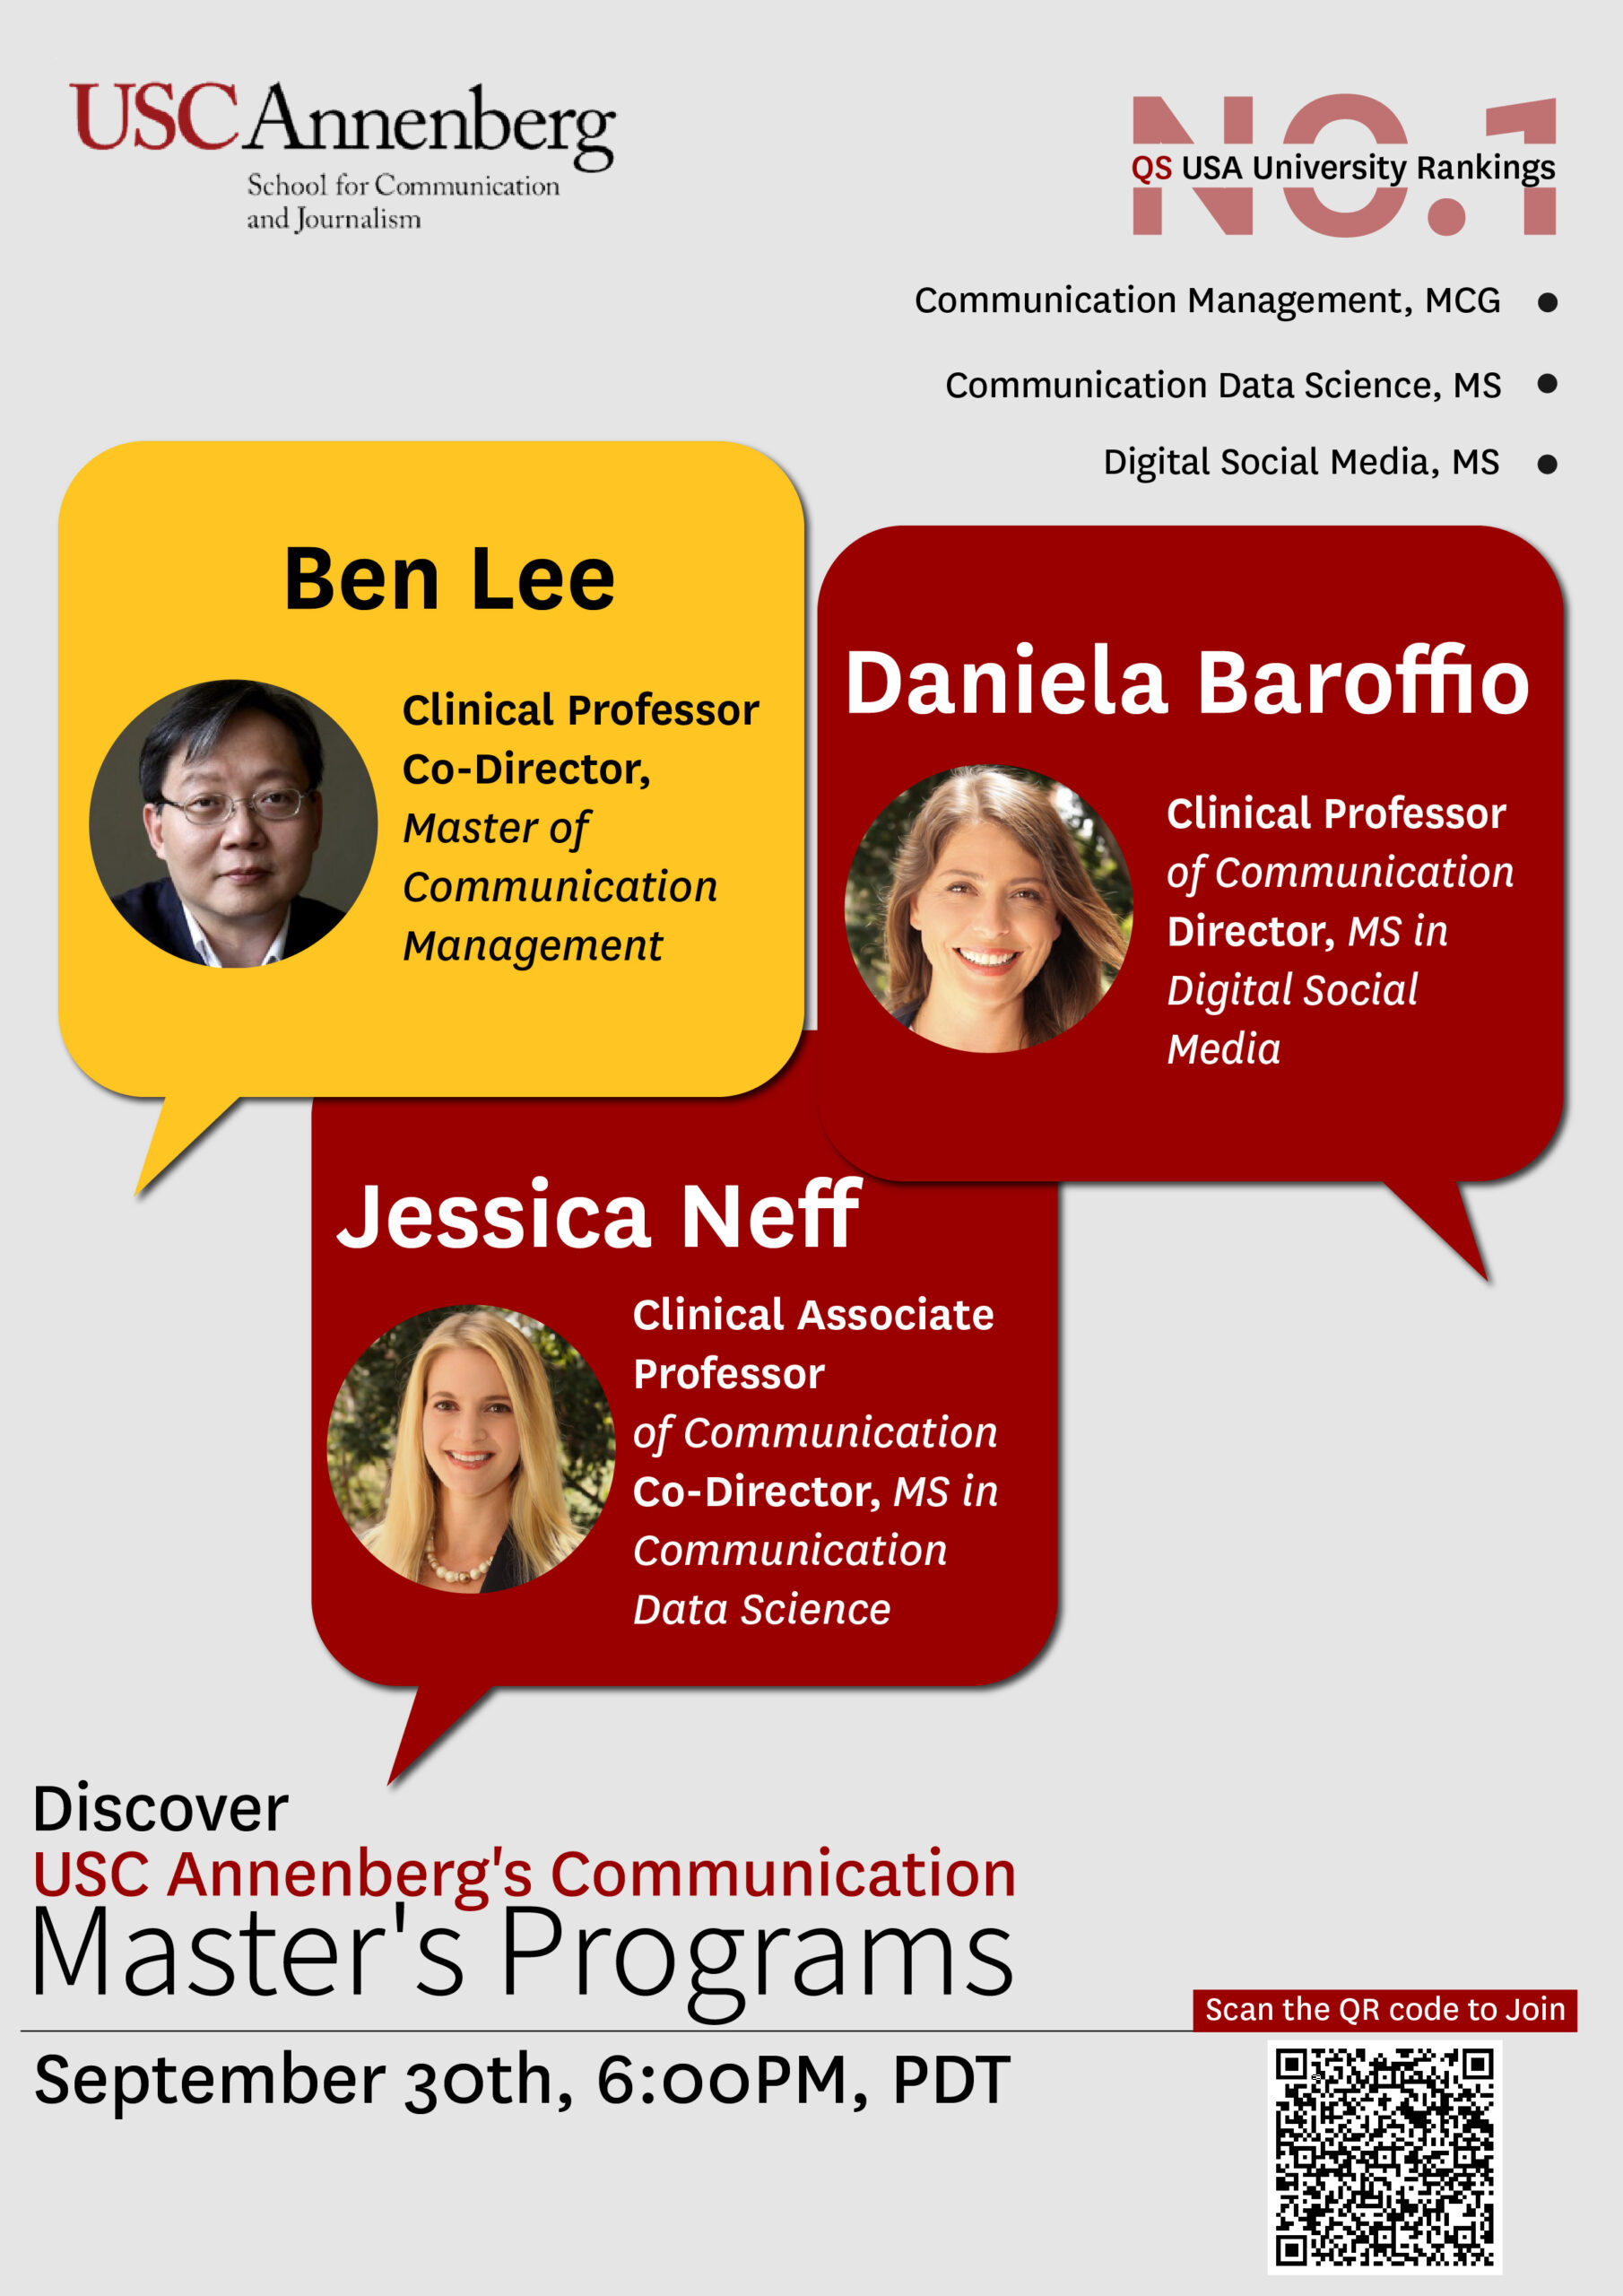 Discover USC Annenberg's Communication Master's Programs